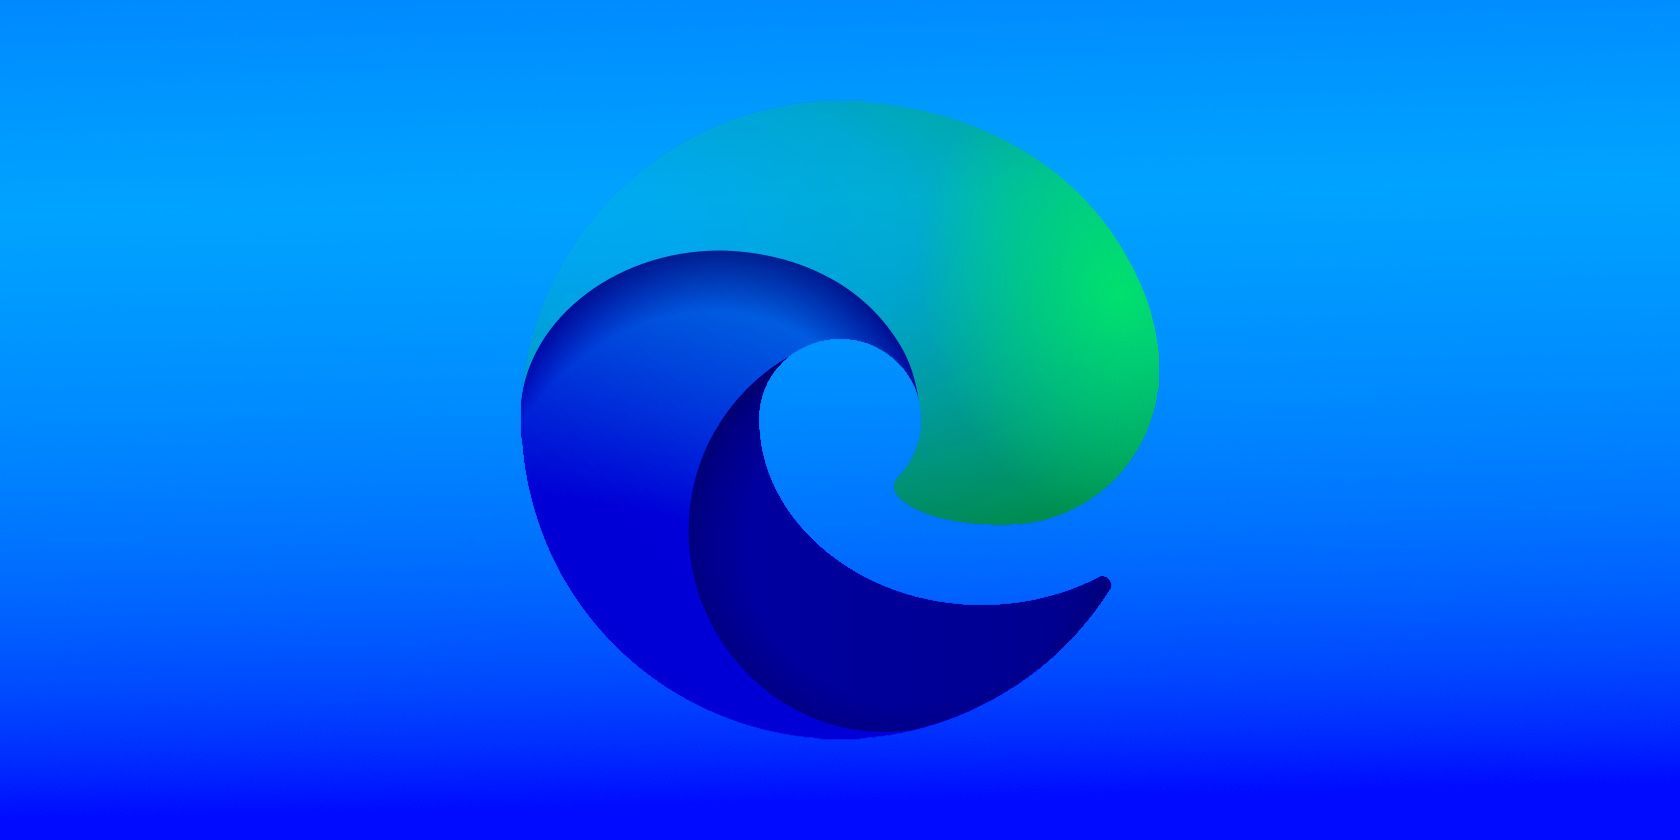 Microsoft Edge logo on a blue background